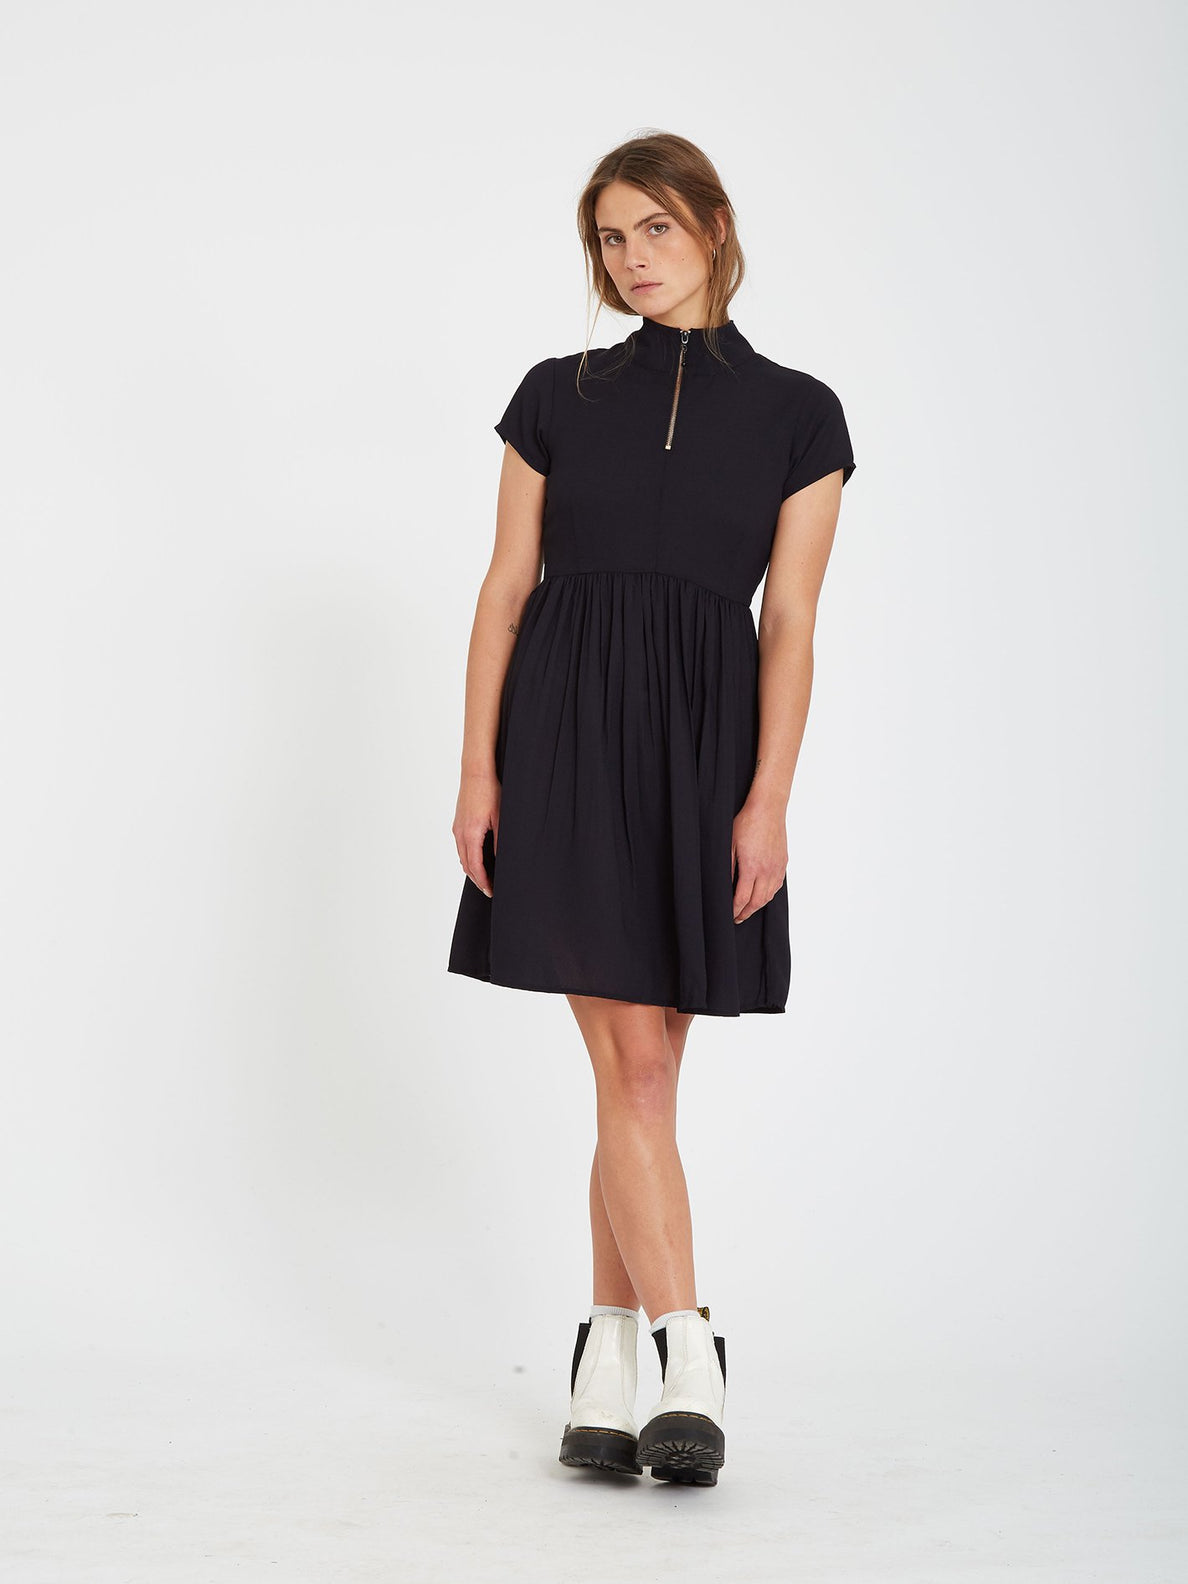 Dotsabilly Dress - BLACK (B1332106_BLK) [16]